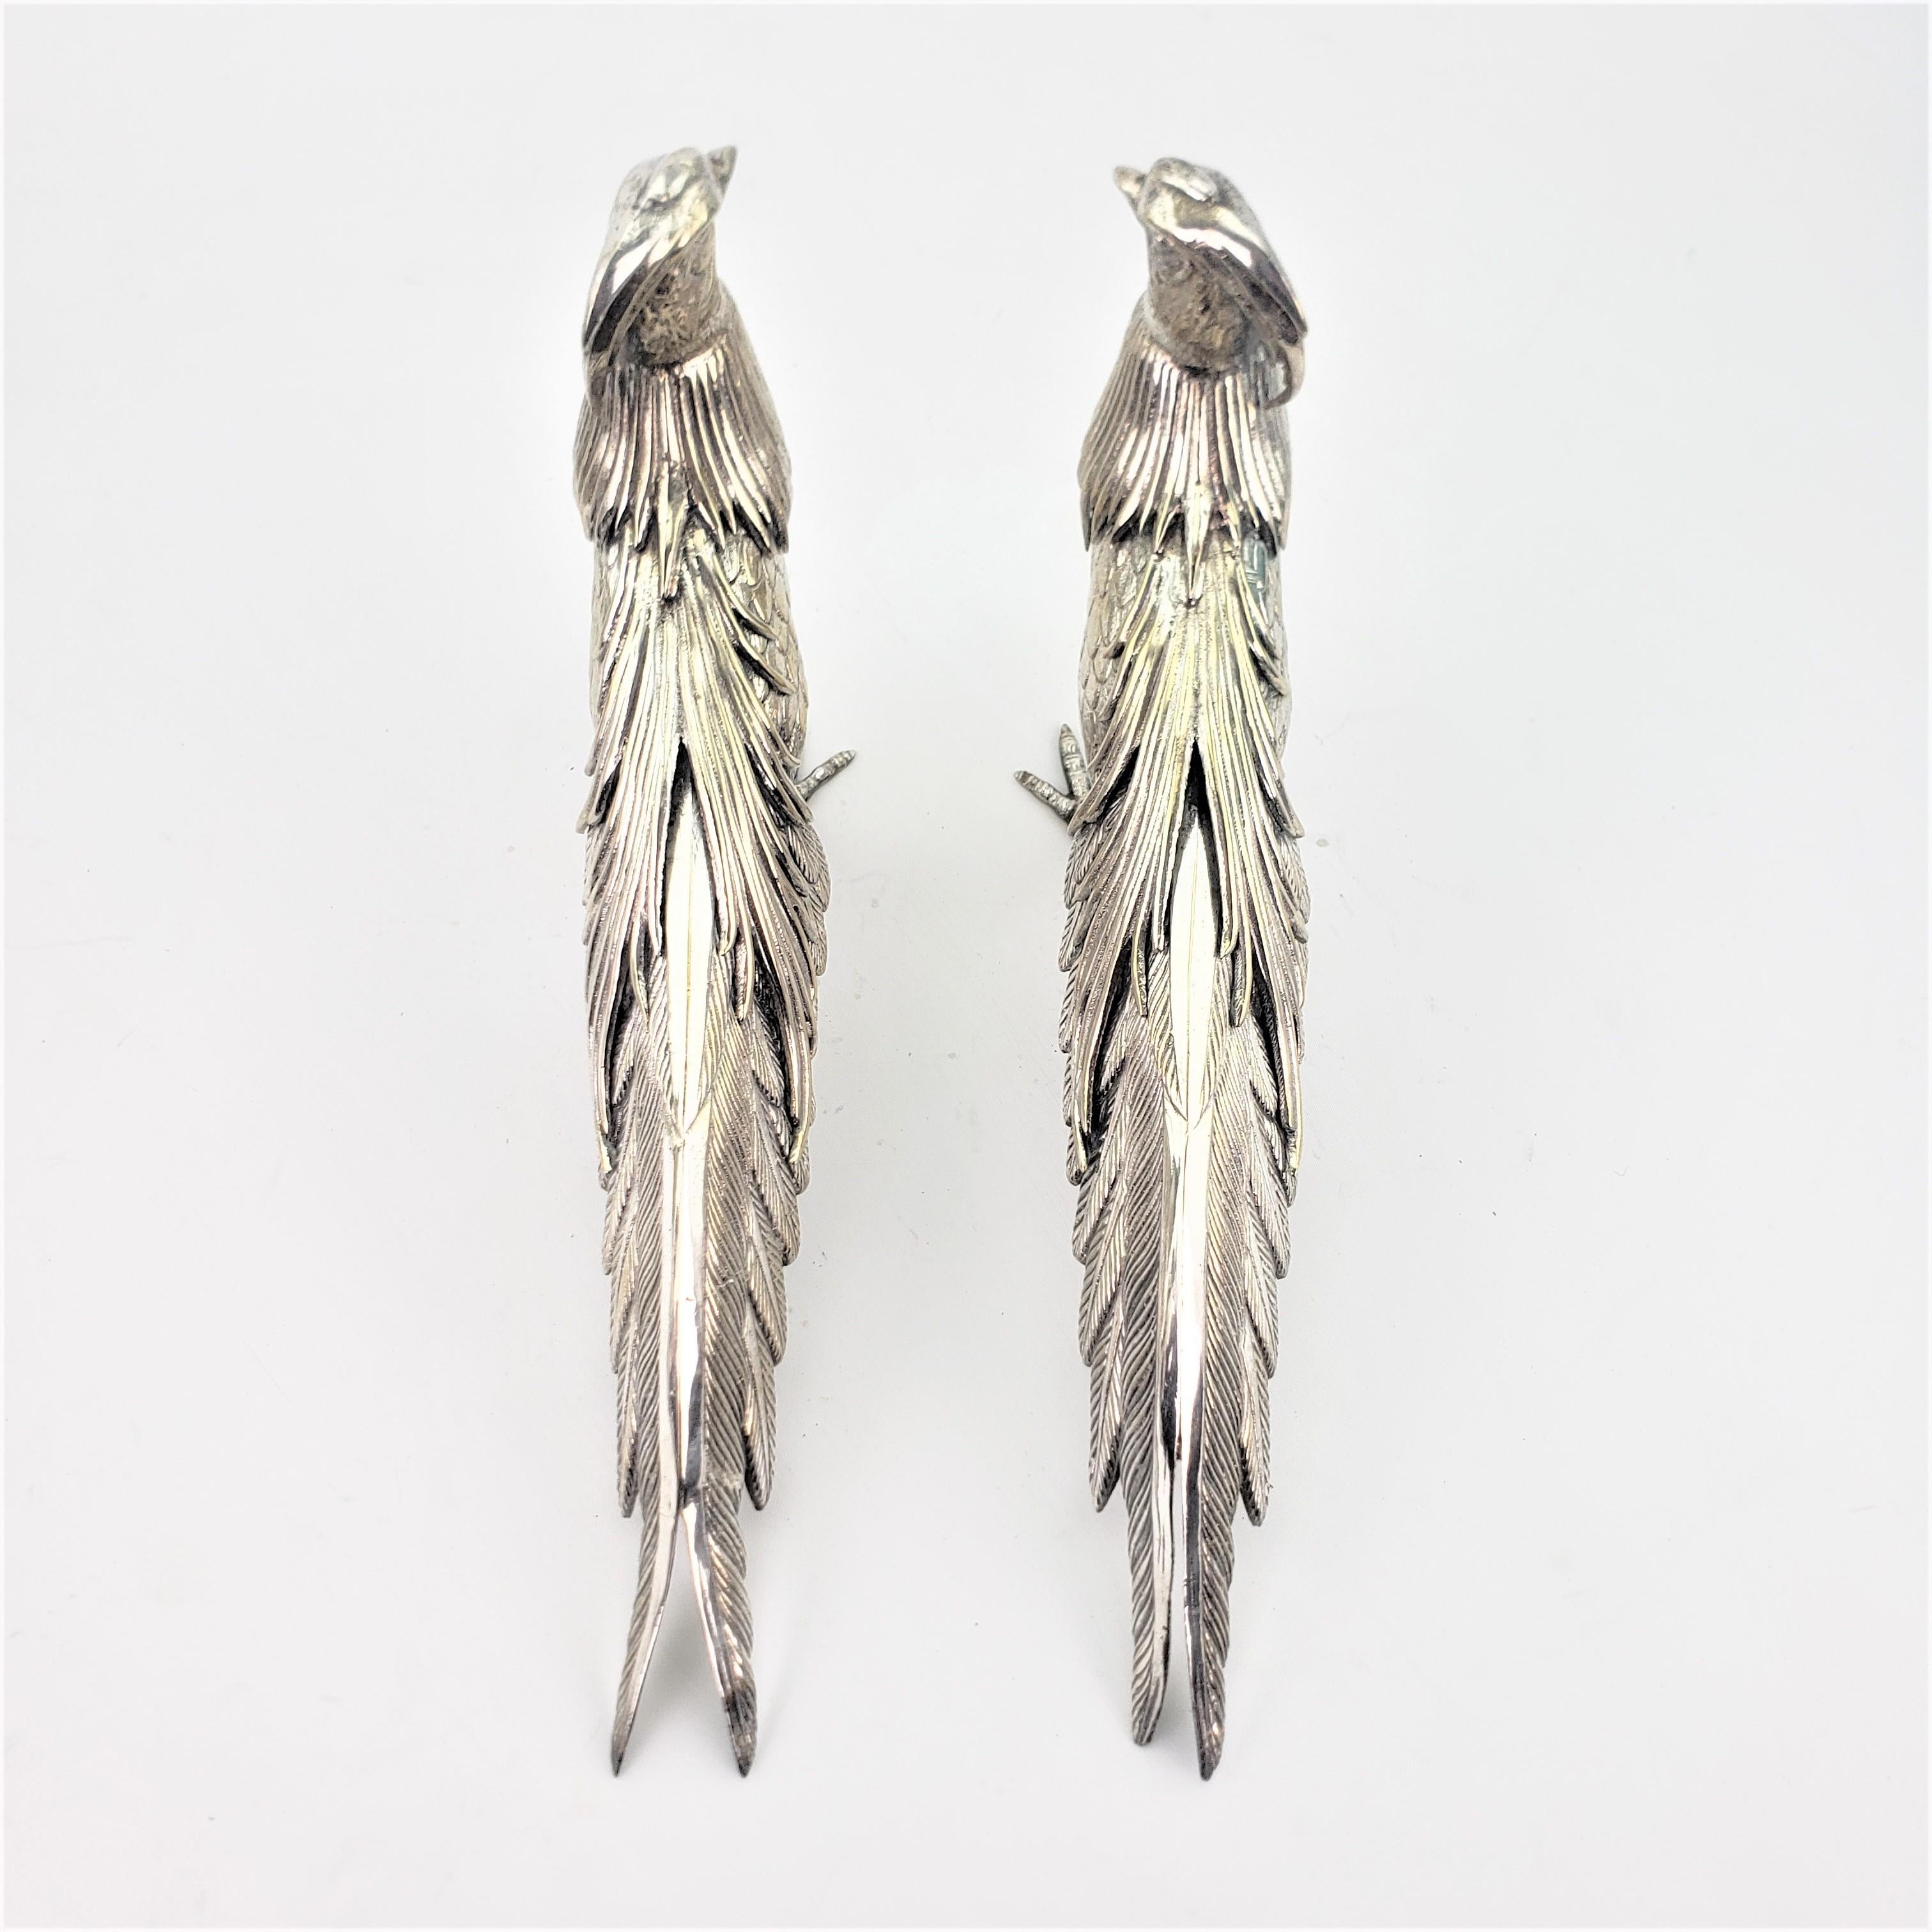 Italian Pair of Antique Silver Plated Decorative Exotic Bird or Pheasant Sculptures